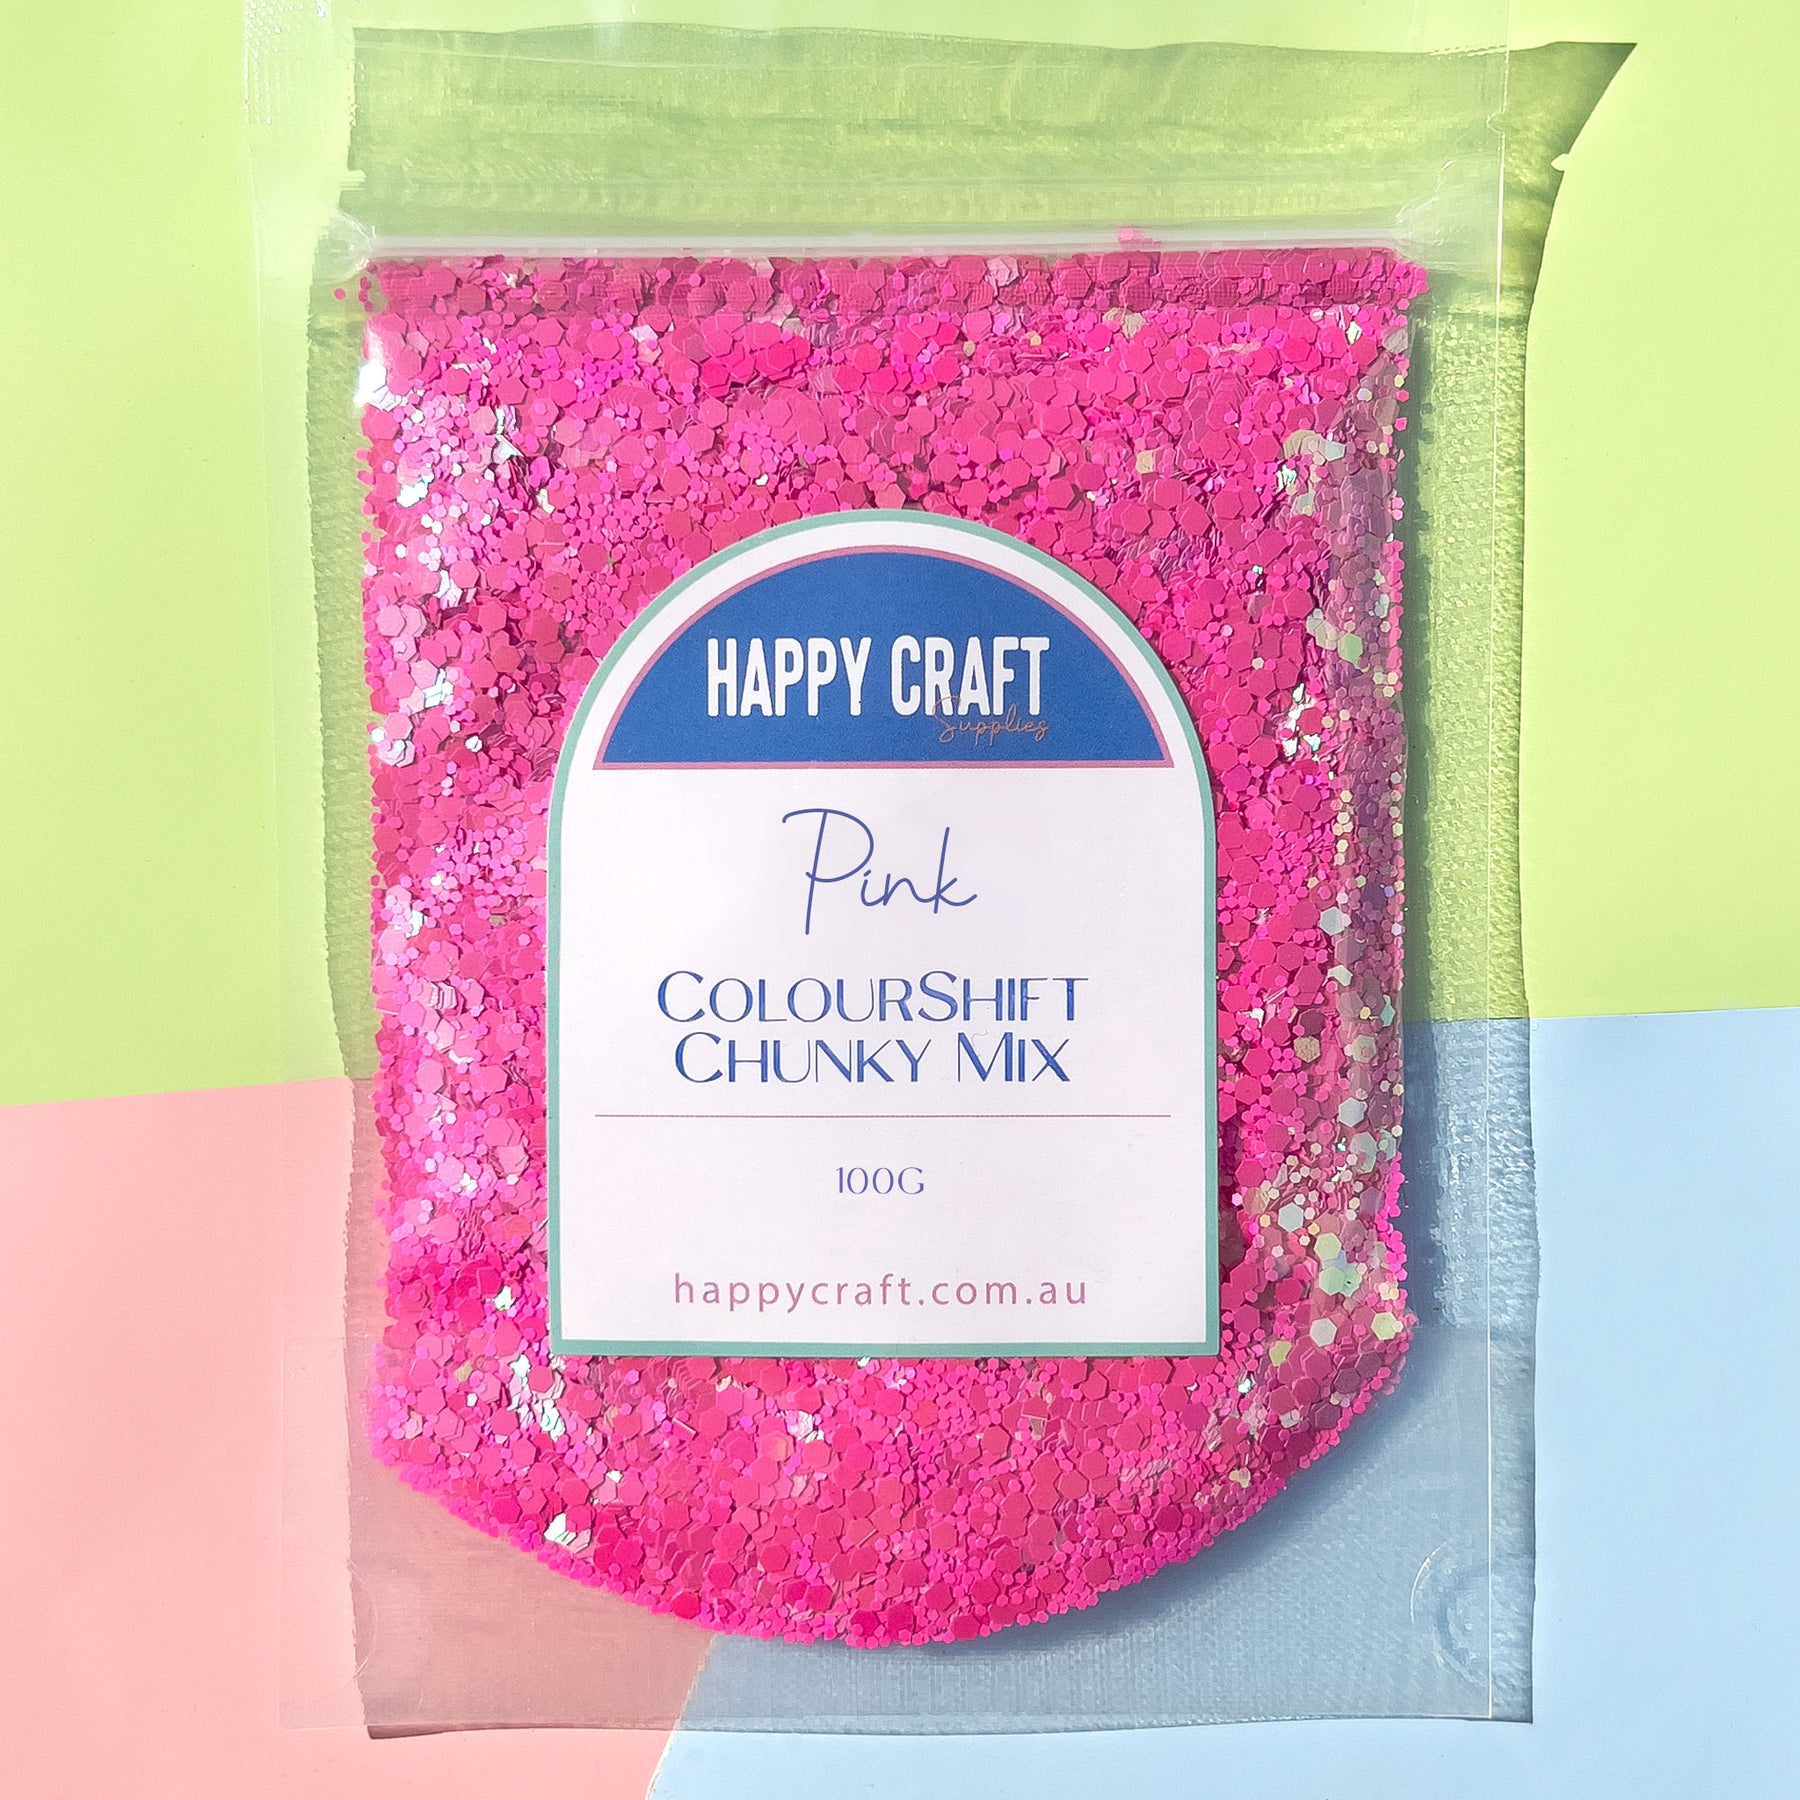 Chunky Glitter Colour Shift Mix - Pink